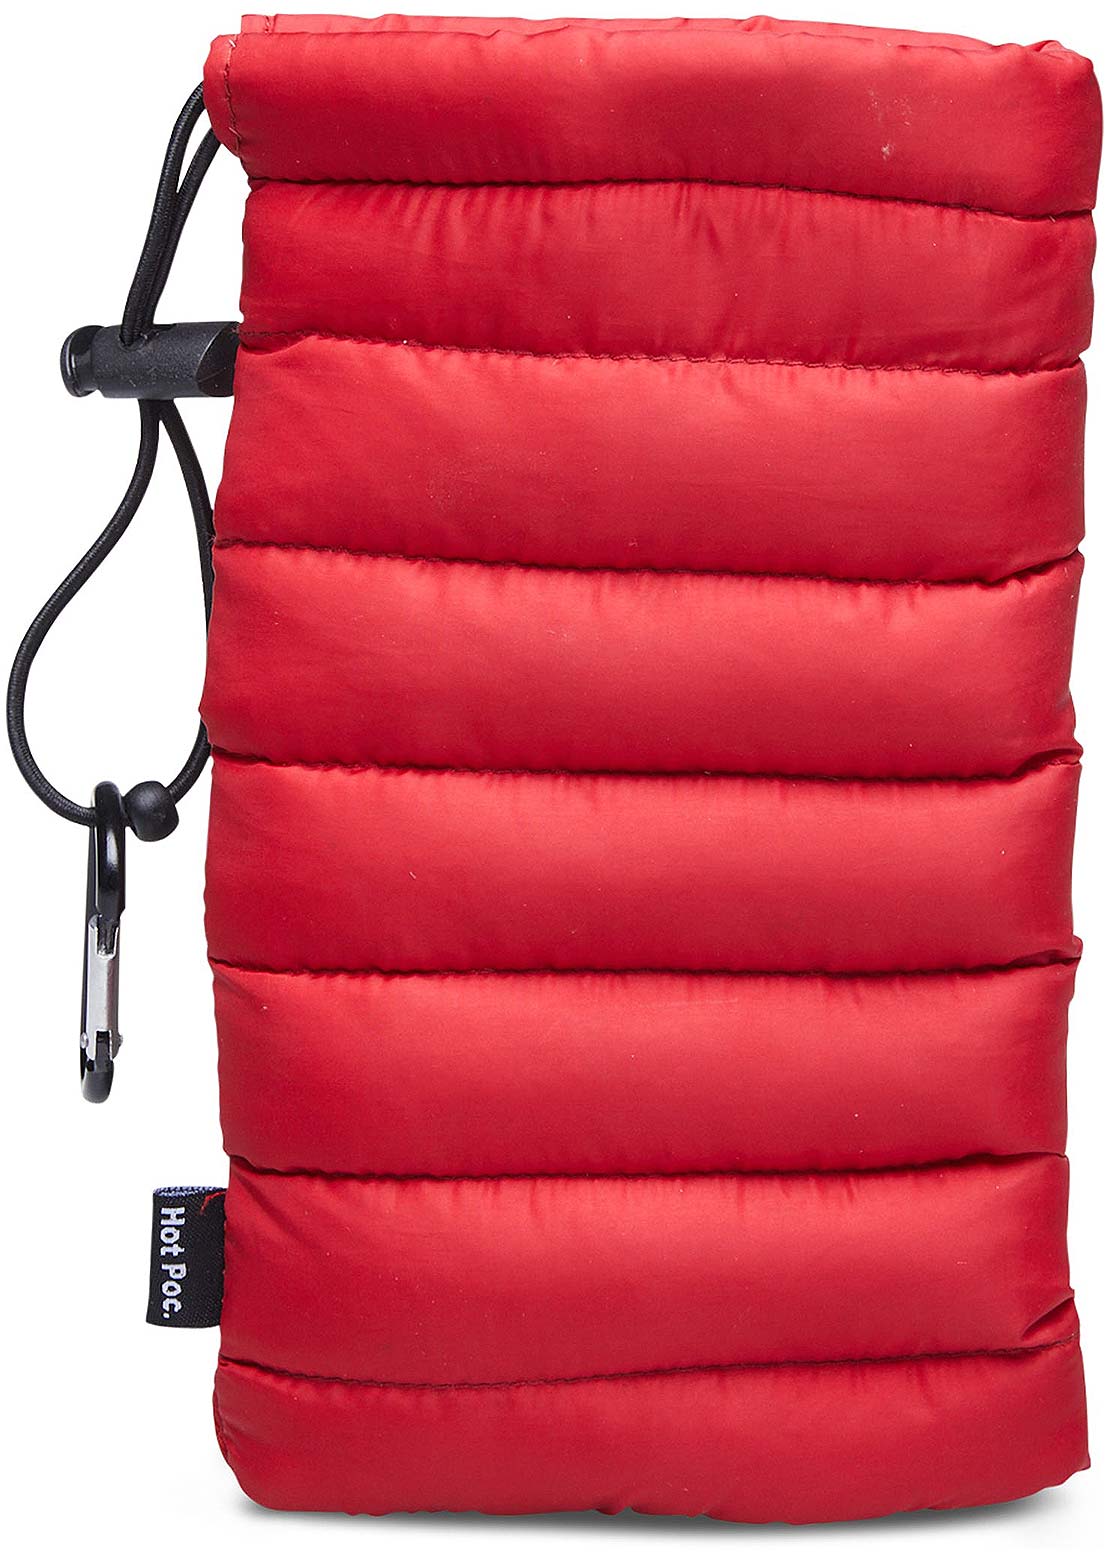 Hot Poc Sleeper + 1 Regular HP logo Bag Red